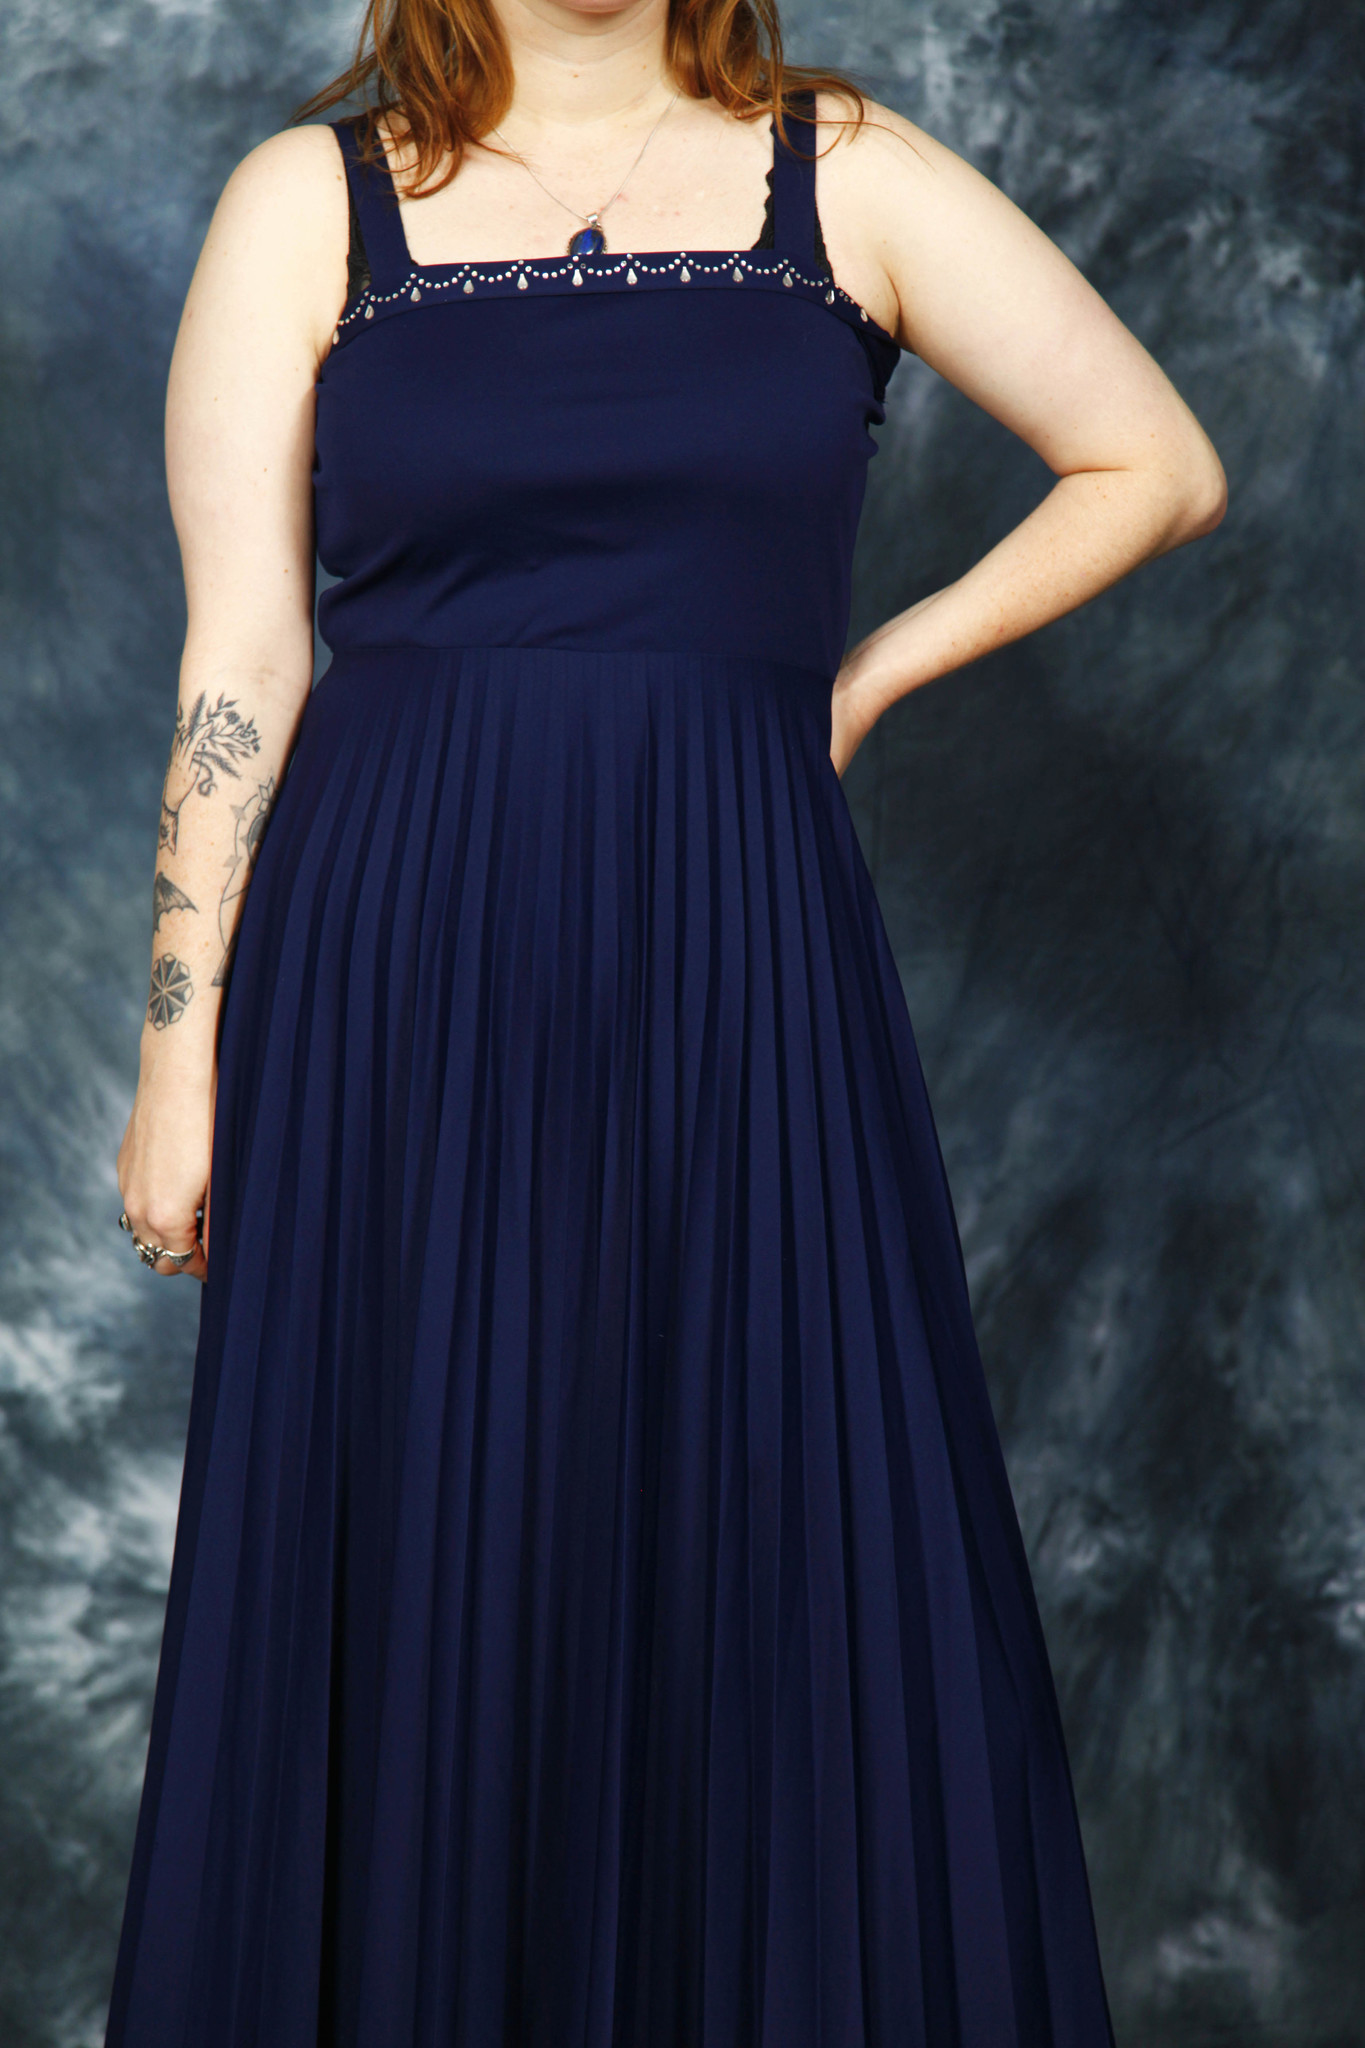 Blue 80s maxi dress